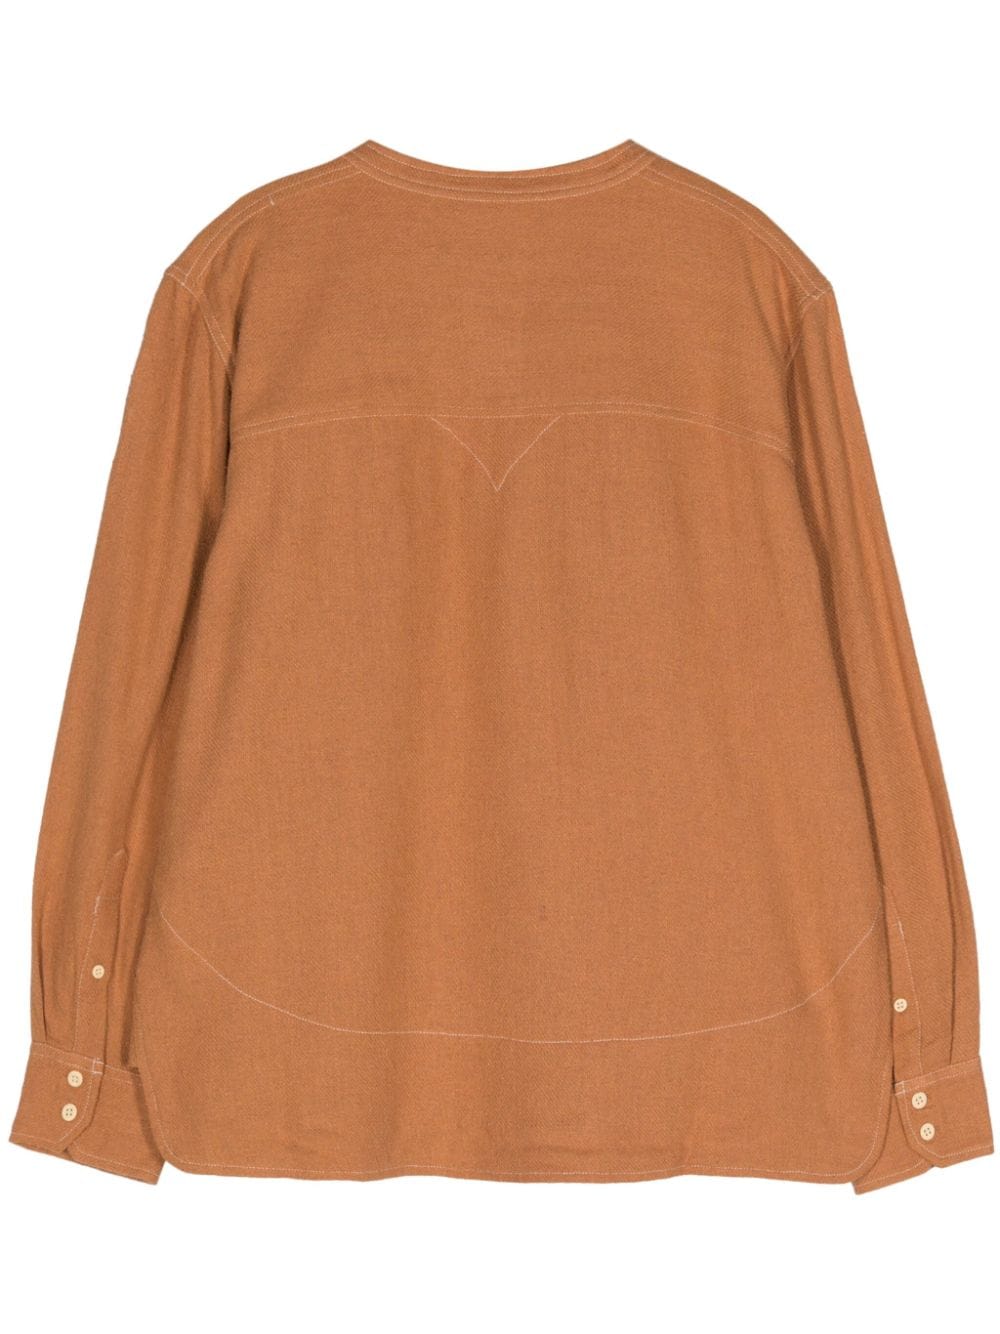 Brown silk knitted construction shirt